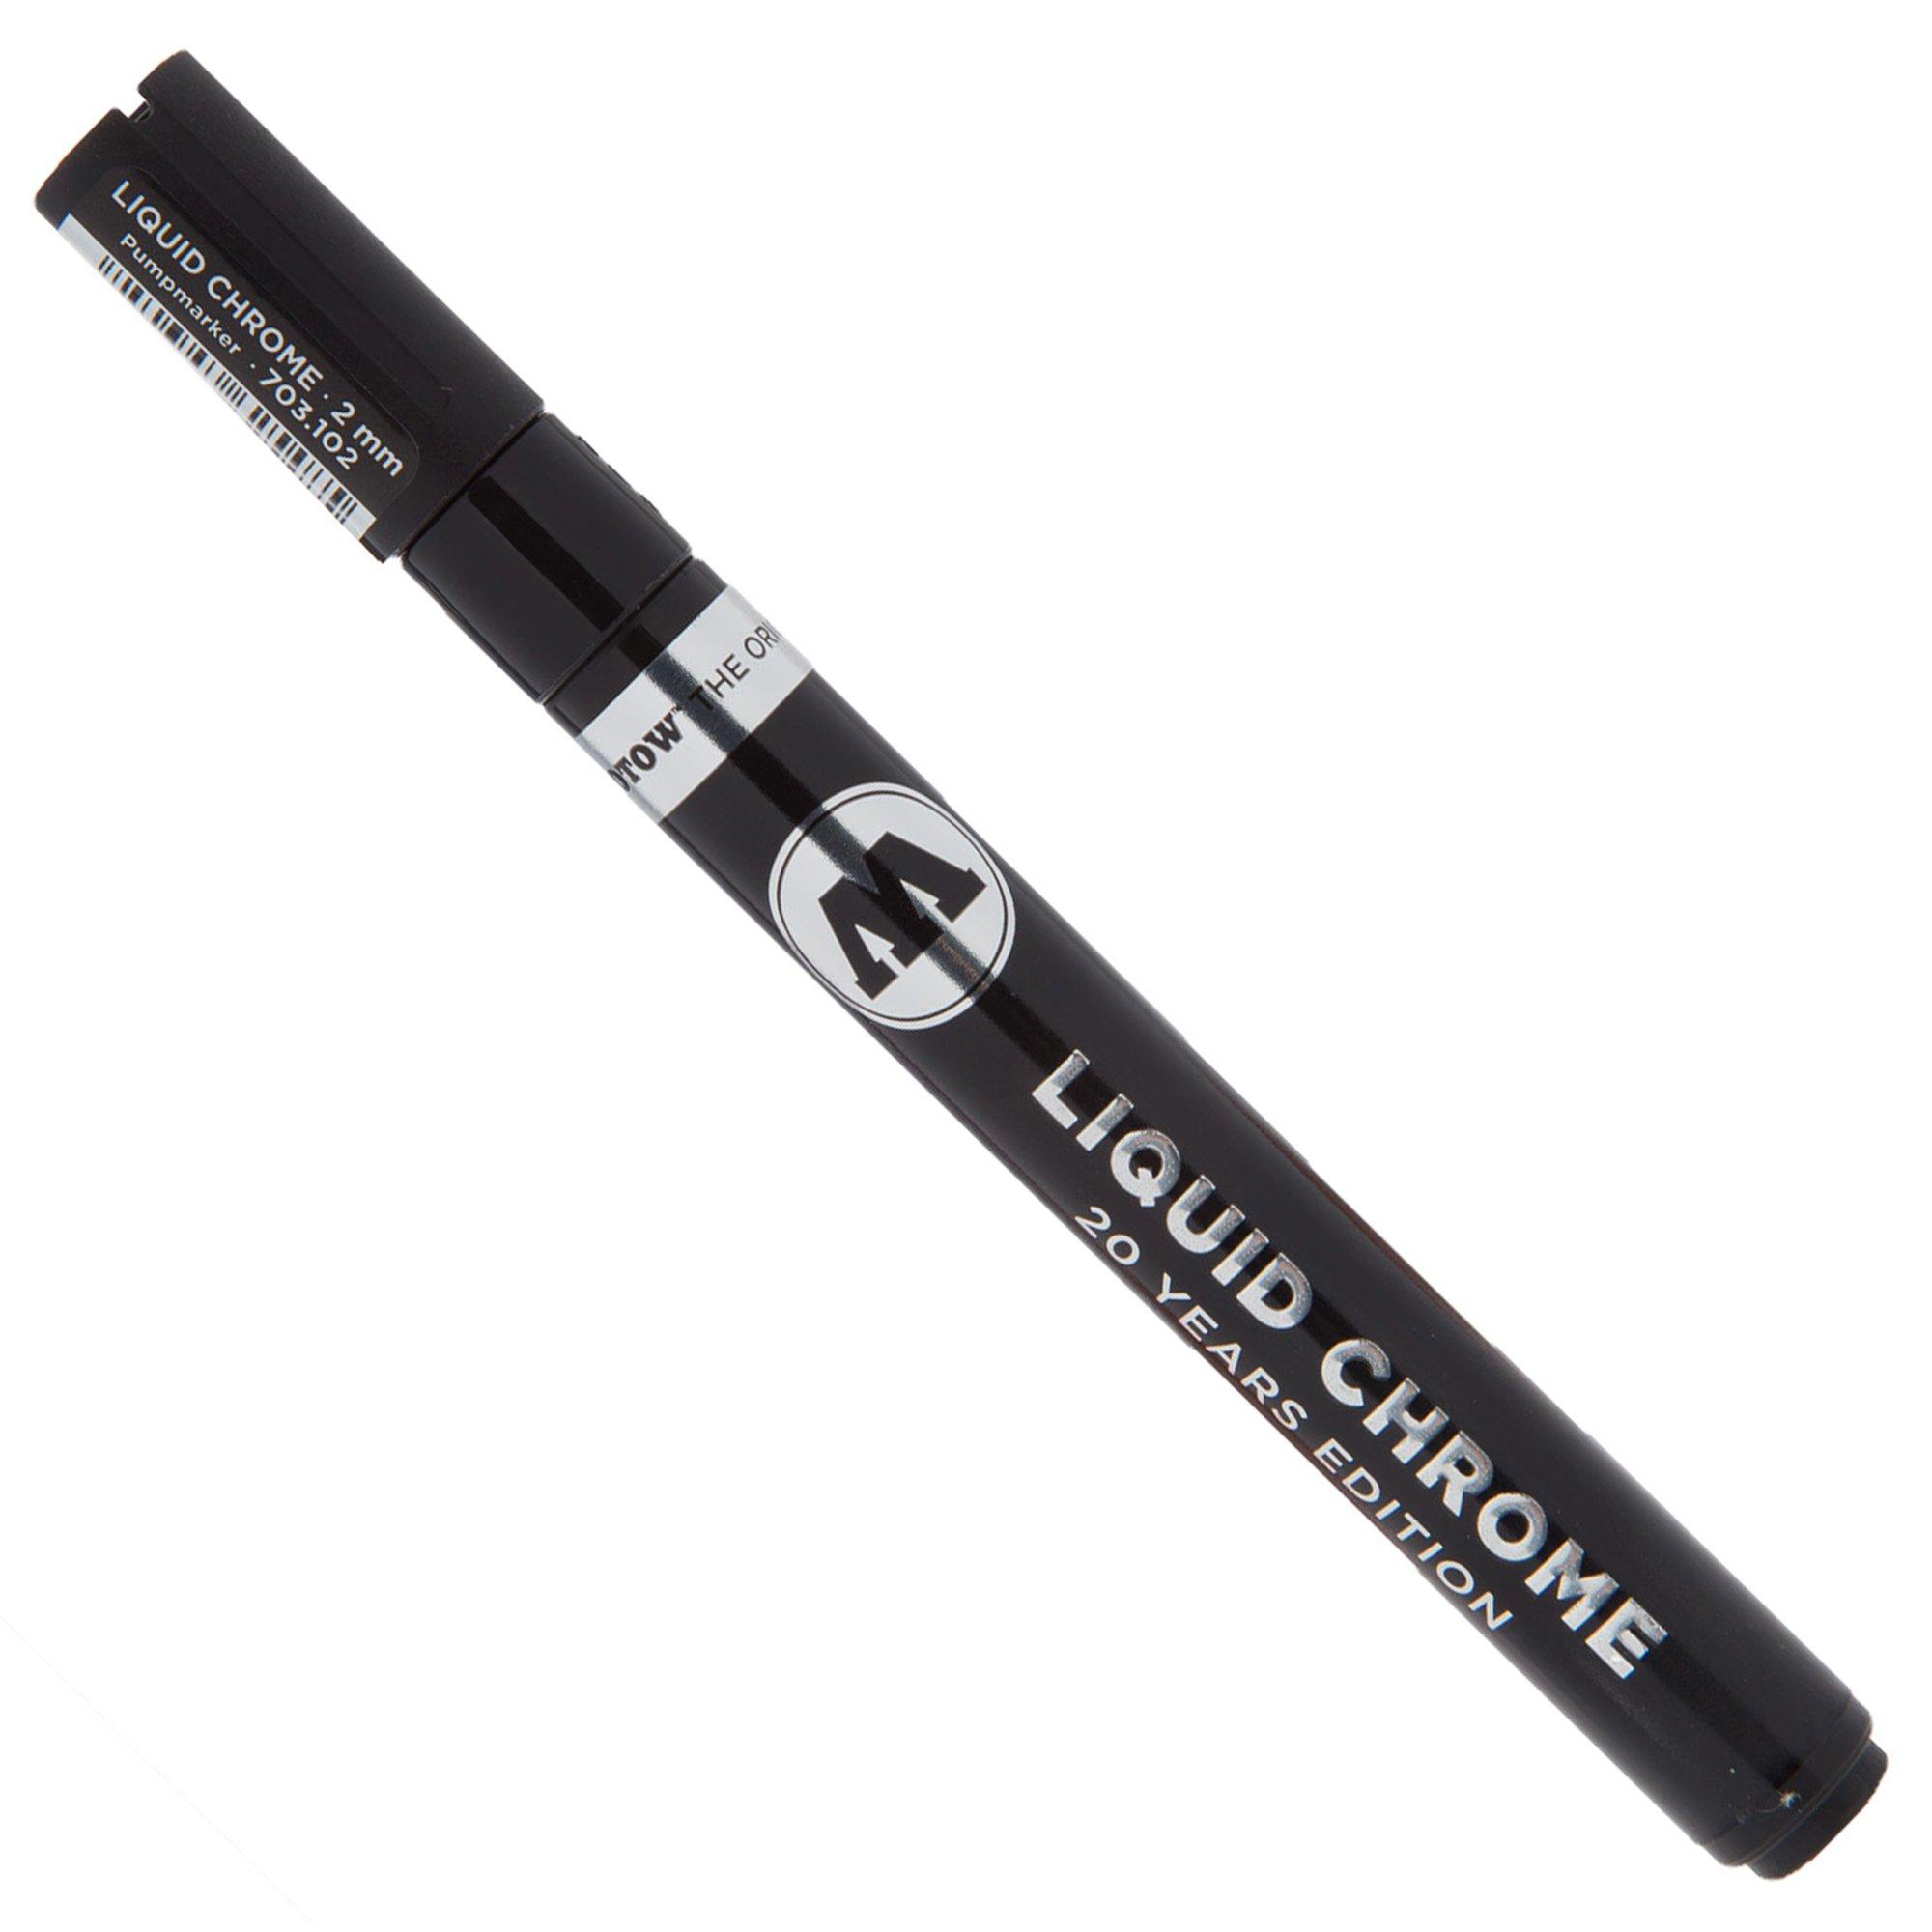 Molotow Liquid Chrome Bundle - Metallic Silver Marker Pen Set - 5 Products